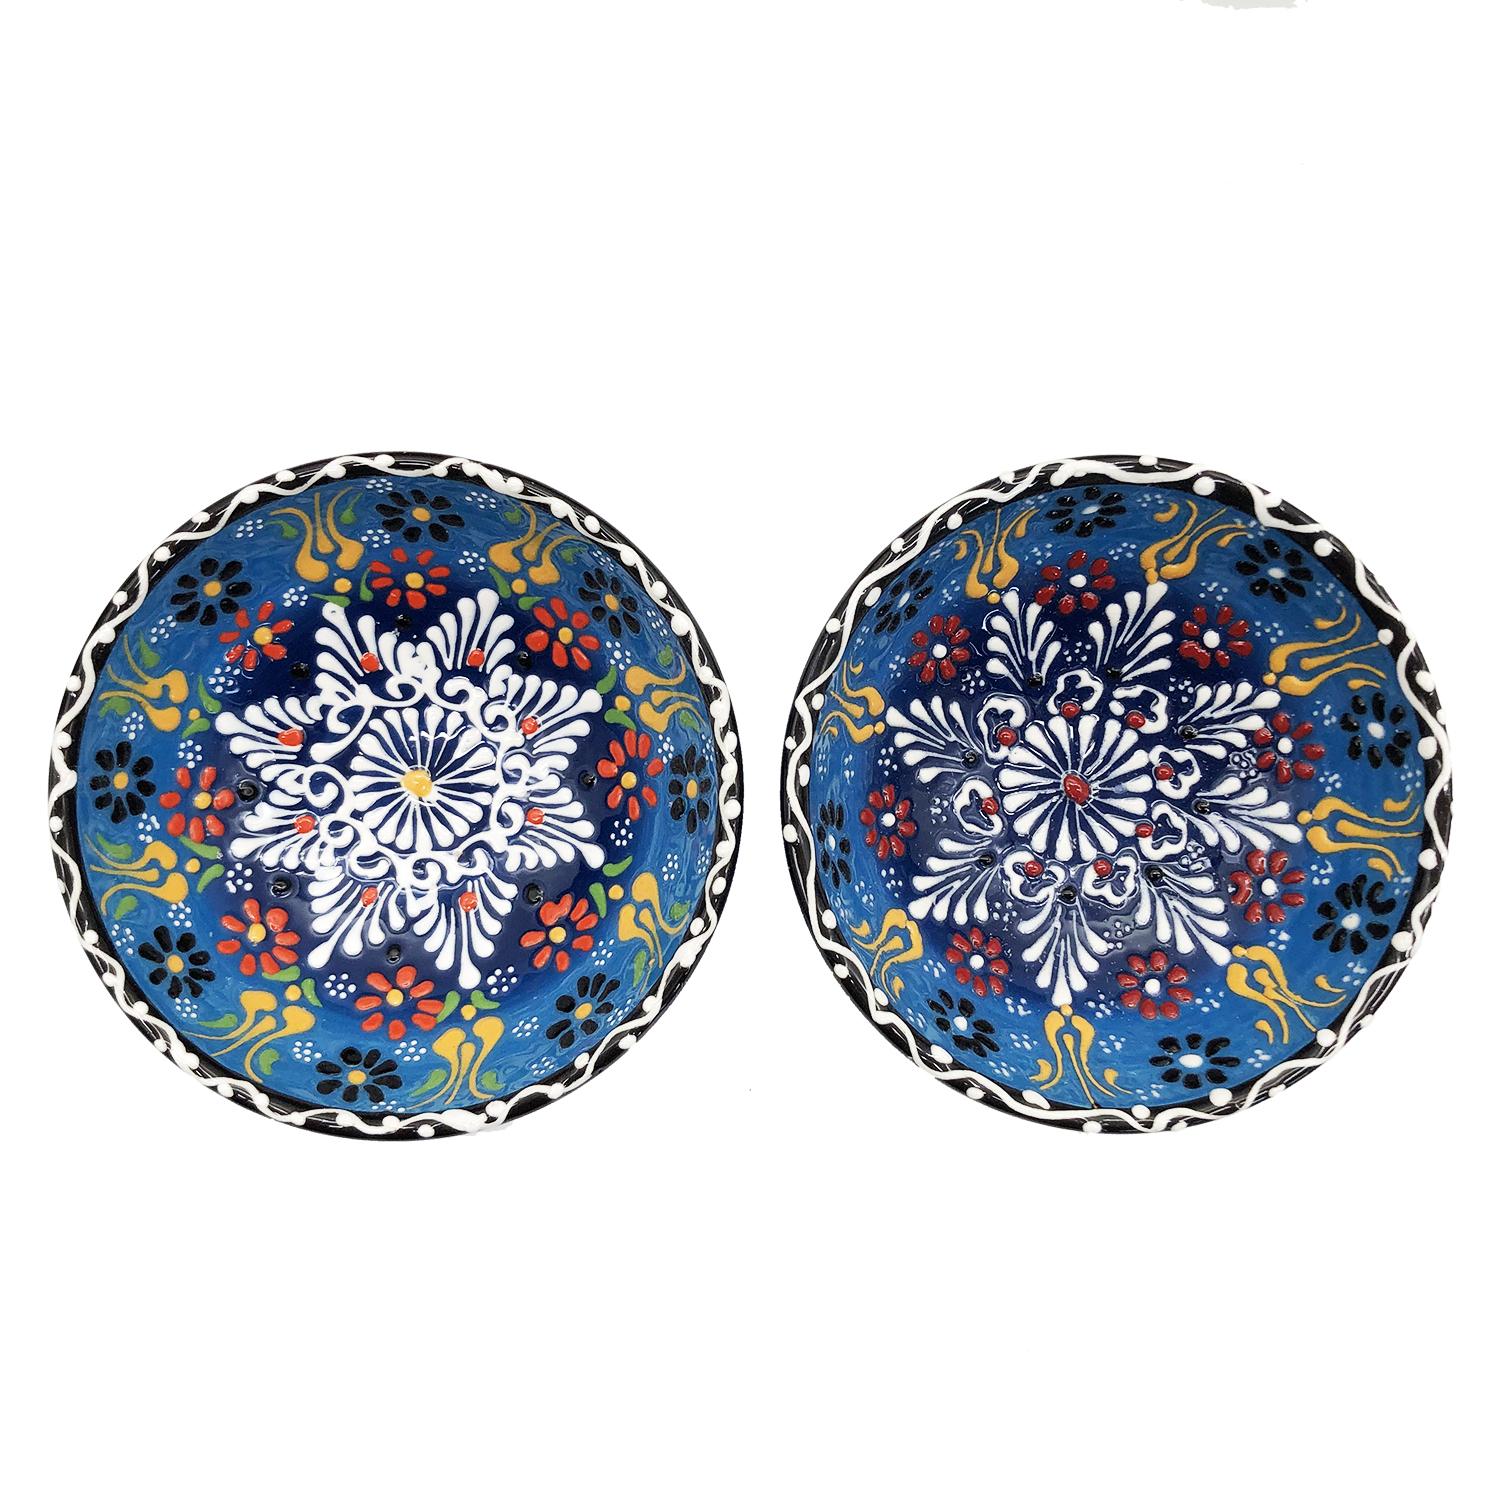 120MM手繪土耳其傳統工藝陶瓷碗， 土耳其餐具奧斯曼帝國浮雕圖案土耳其藝術時尚潮物(VTR-CERAMIC-BOWL-120MM-30102)